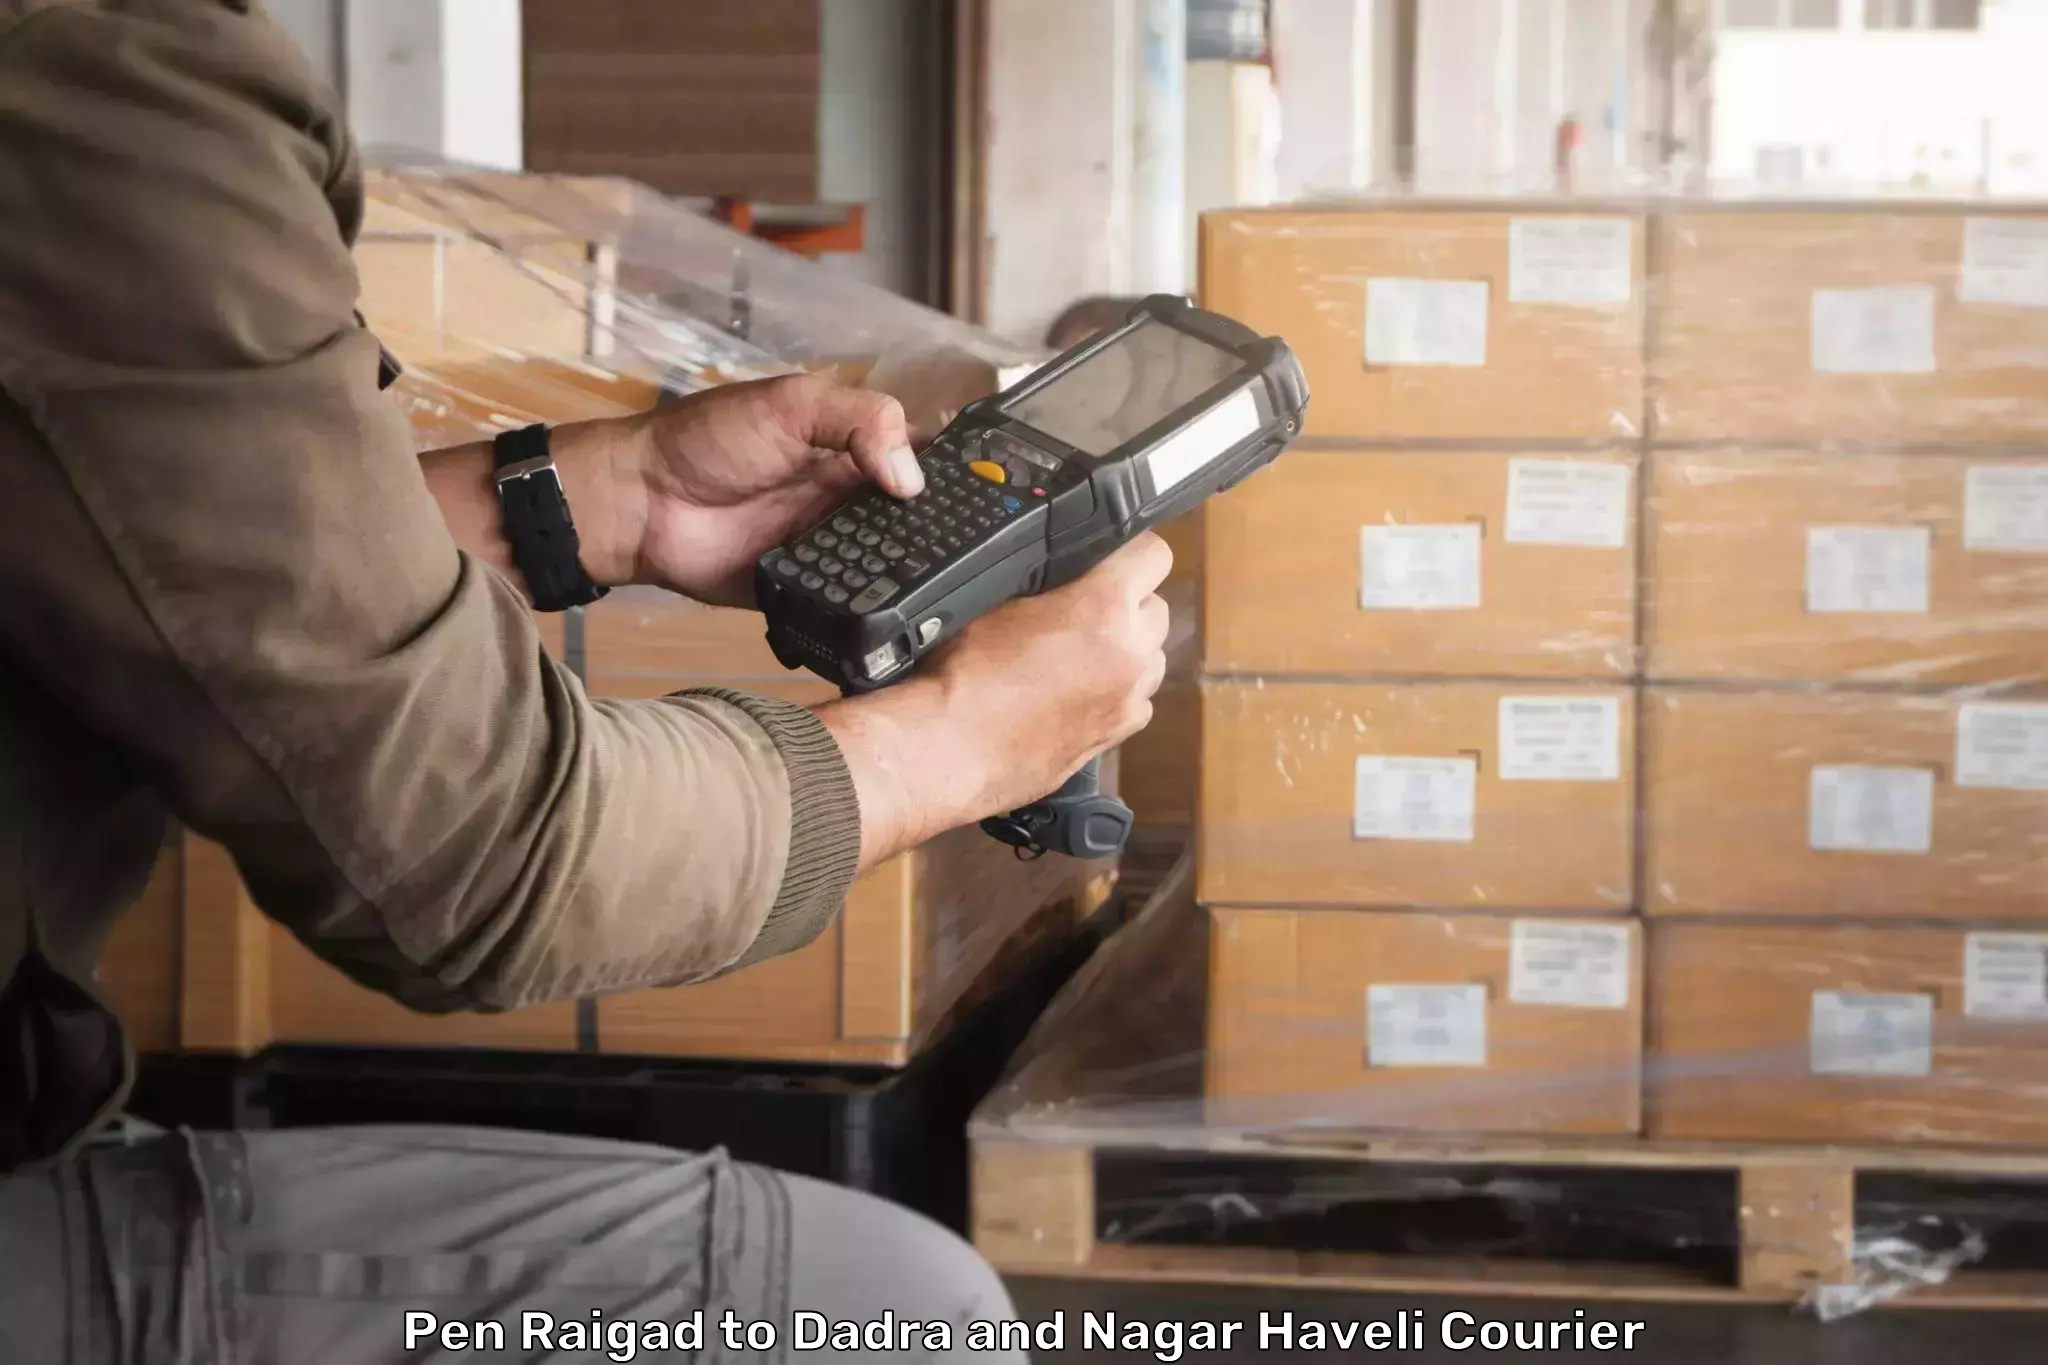 Cost-effective courier solutions Pen Raigad to Silvassa